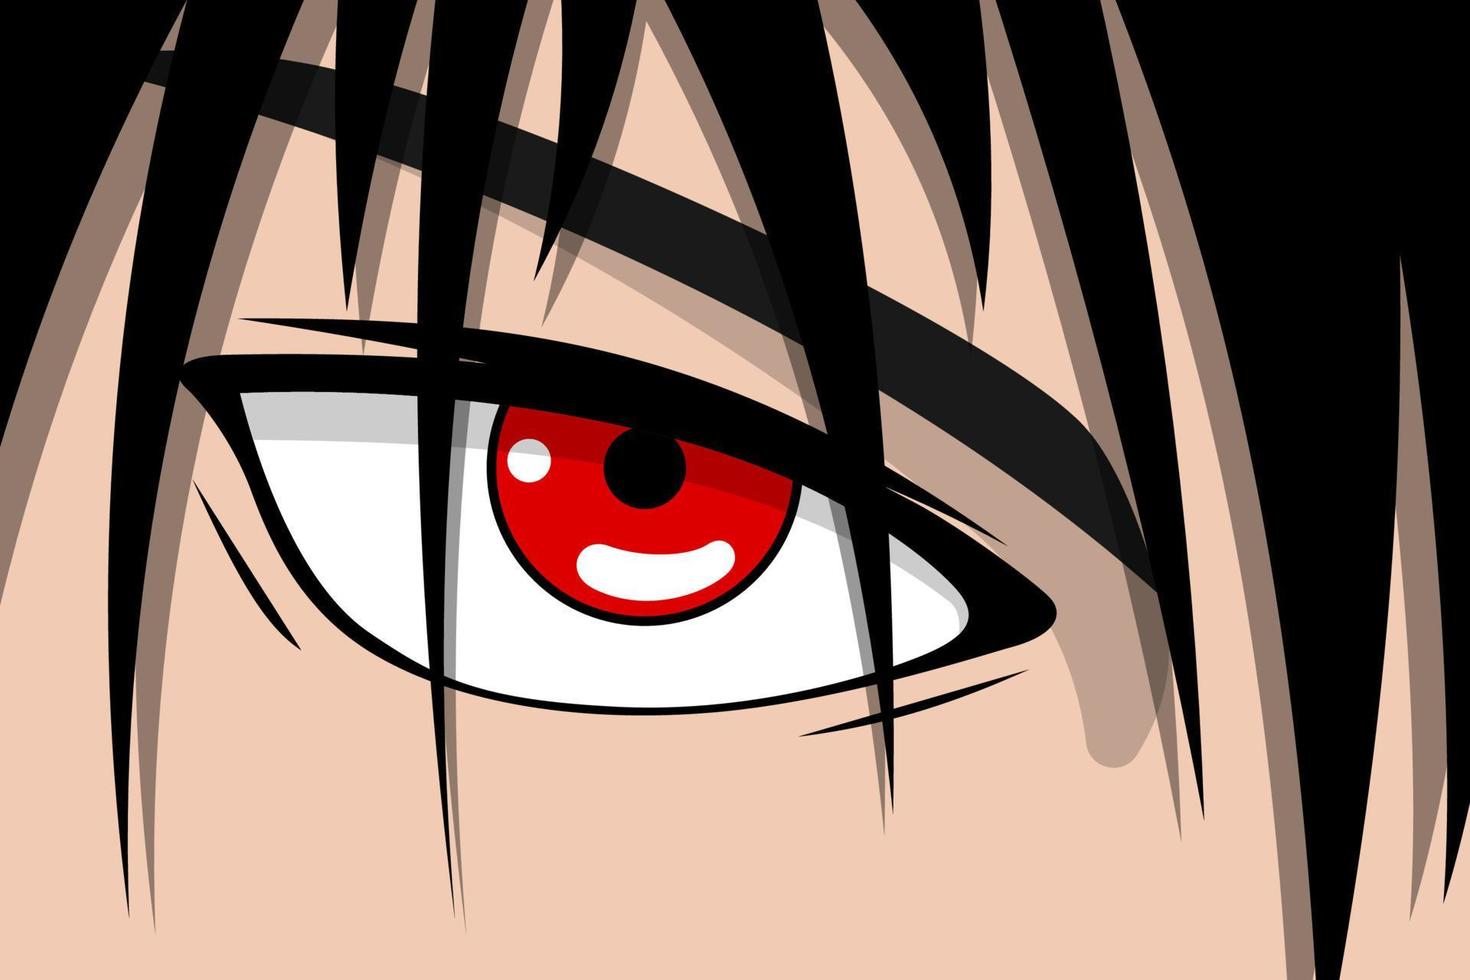 cara de niño bonito de anime con ojos rojos y cabello negro. concepto de fondo de arte de héroe de manga. ilustración vectorial de aspecto de dibujos animados eps vector